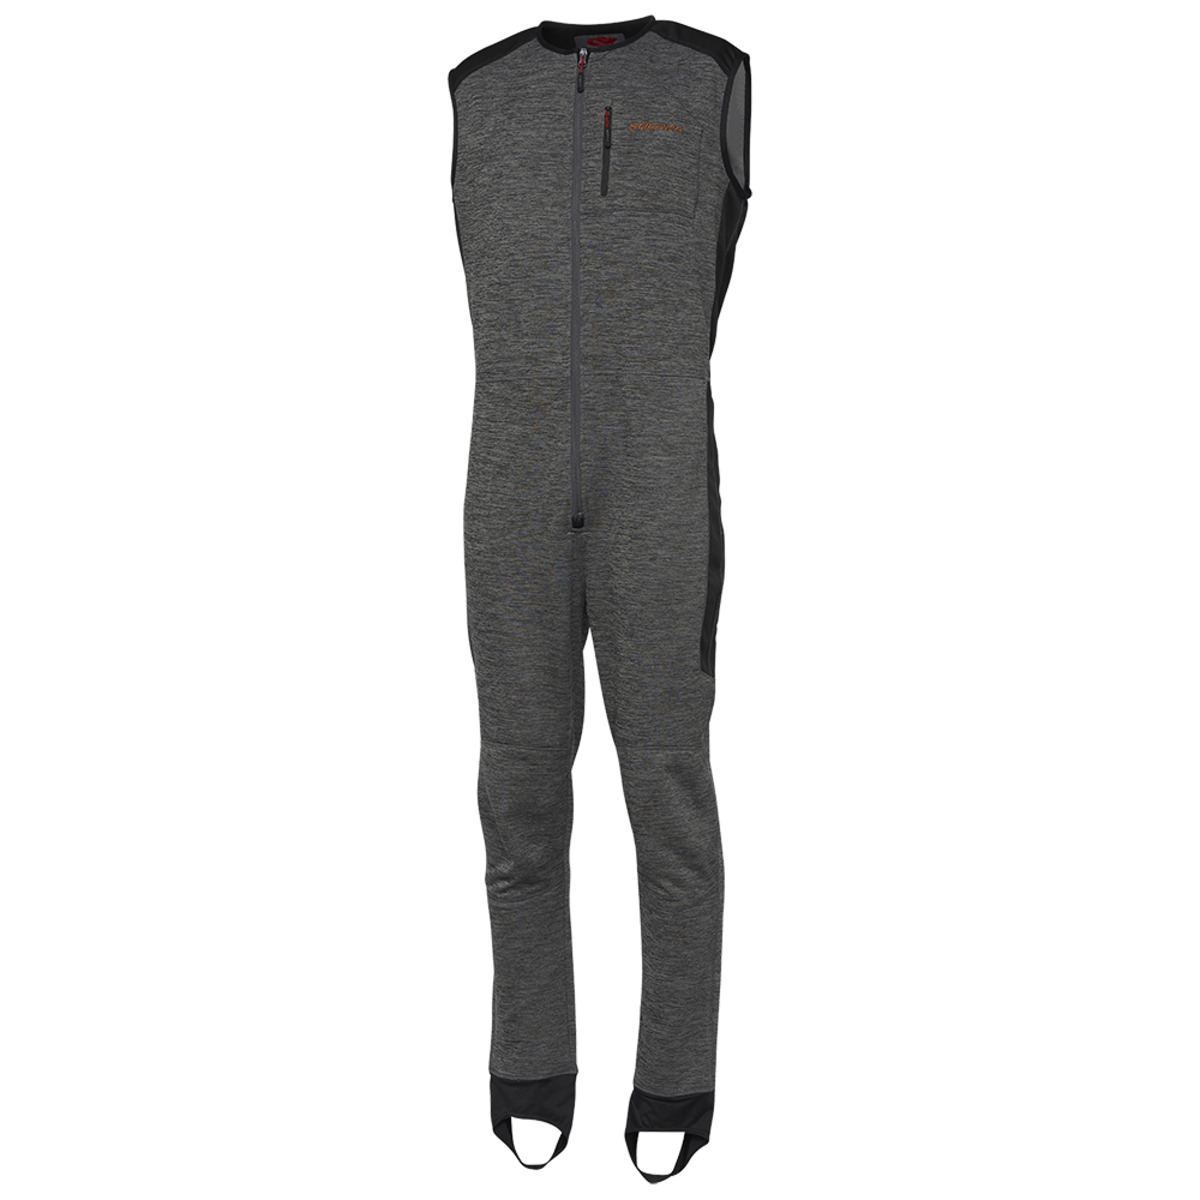 Scierra Insulated Body Suit - XL PEWTER GREY MELANGE